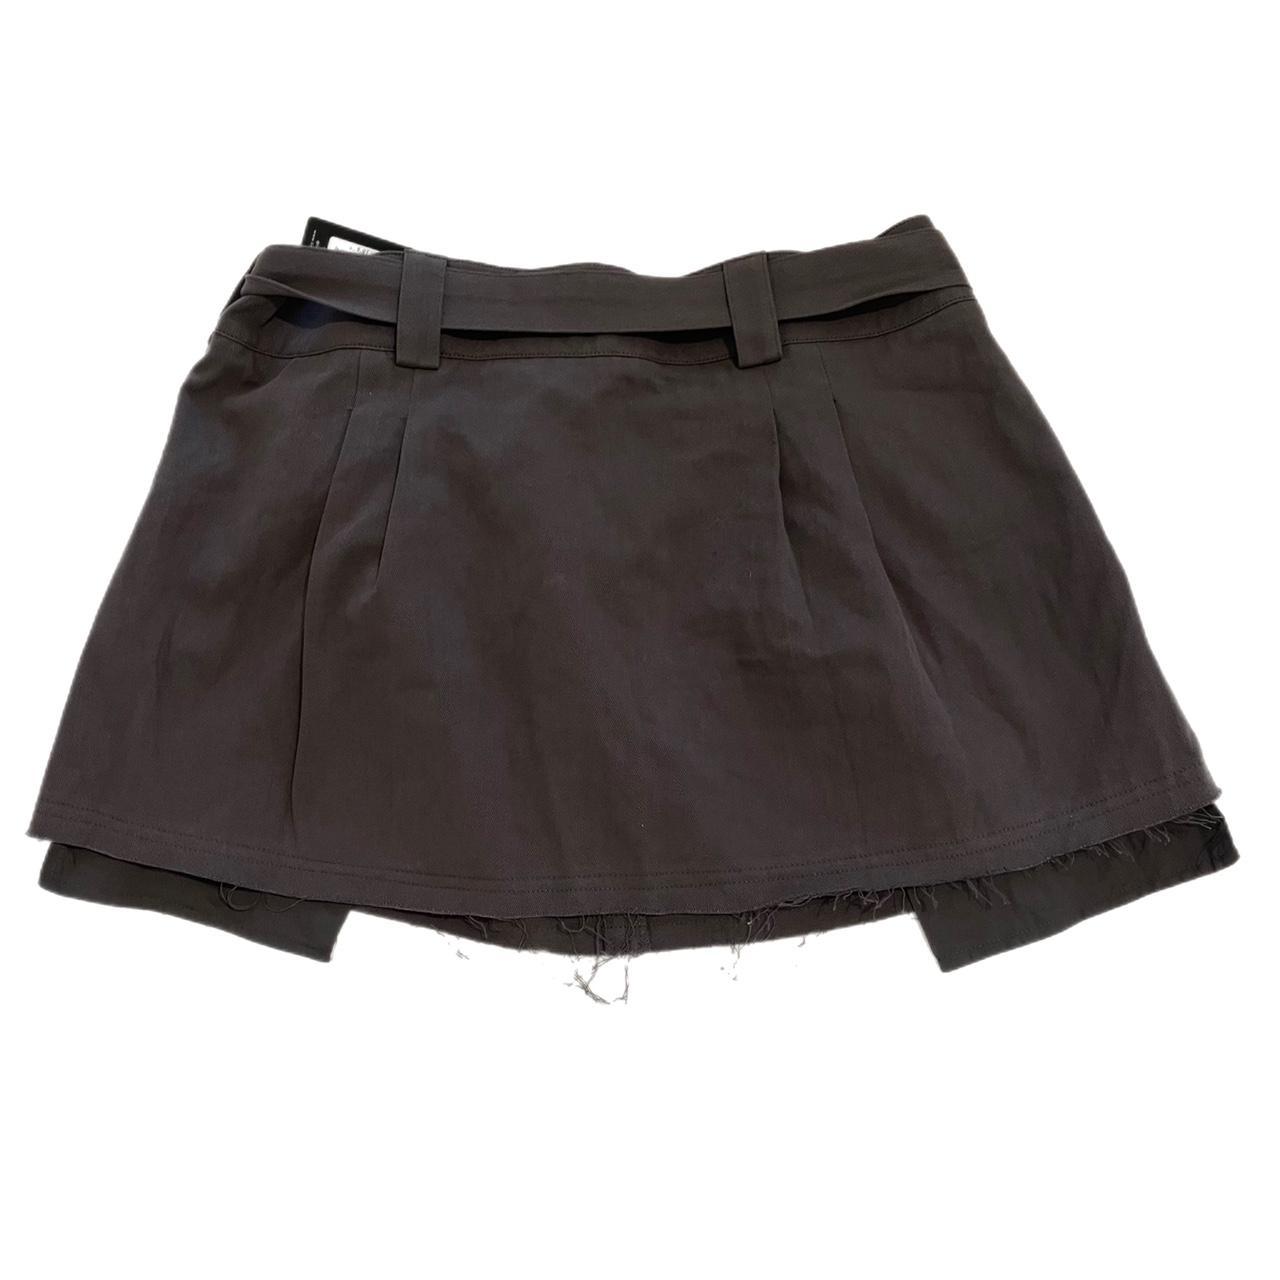 Lioness mini skirt in slate grey colour Super... - Depop